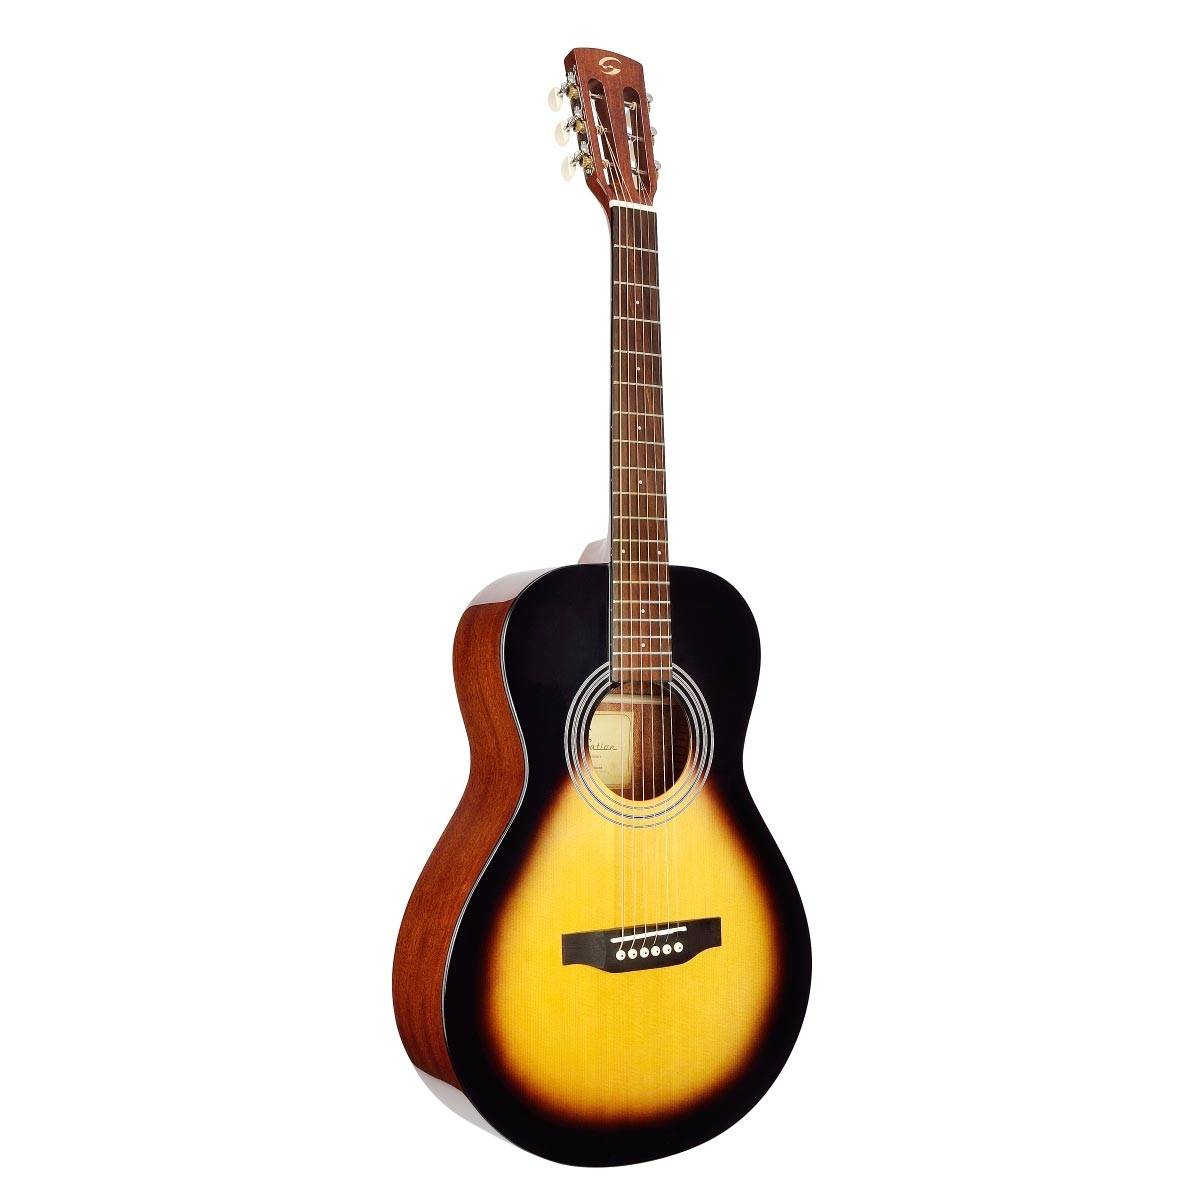 SOUNDSATION Delta Crossroad SGSB Acoustic Guitar